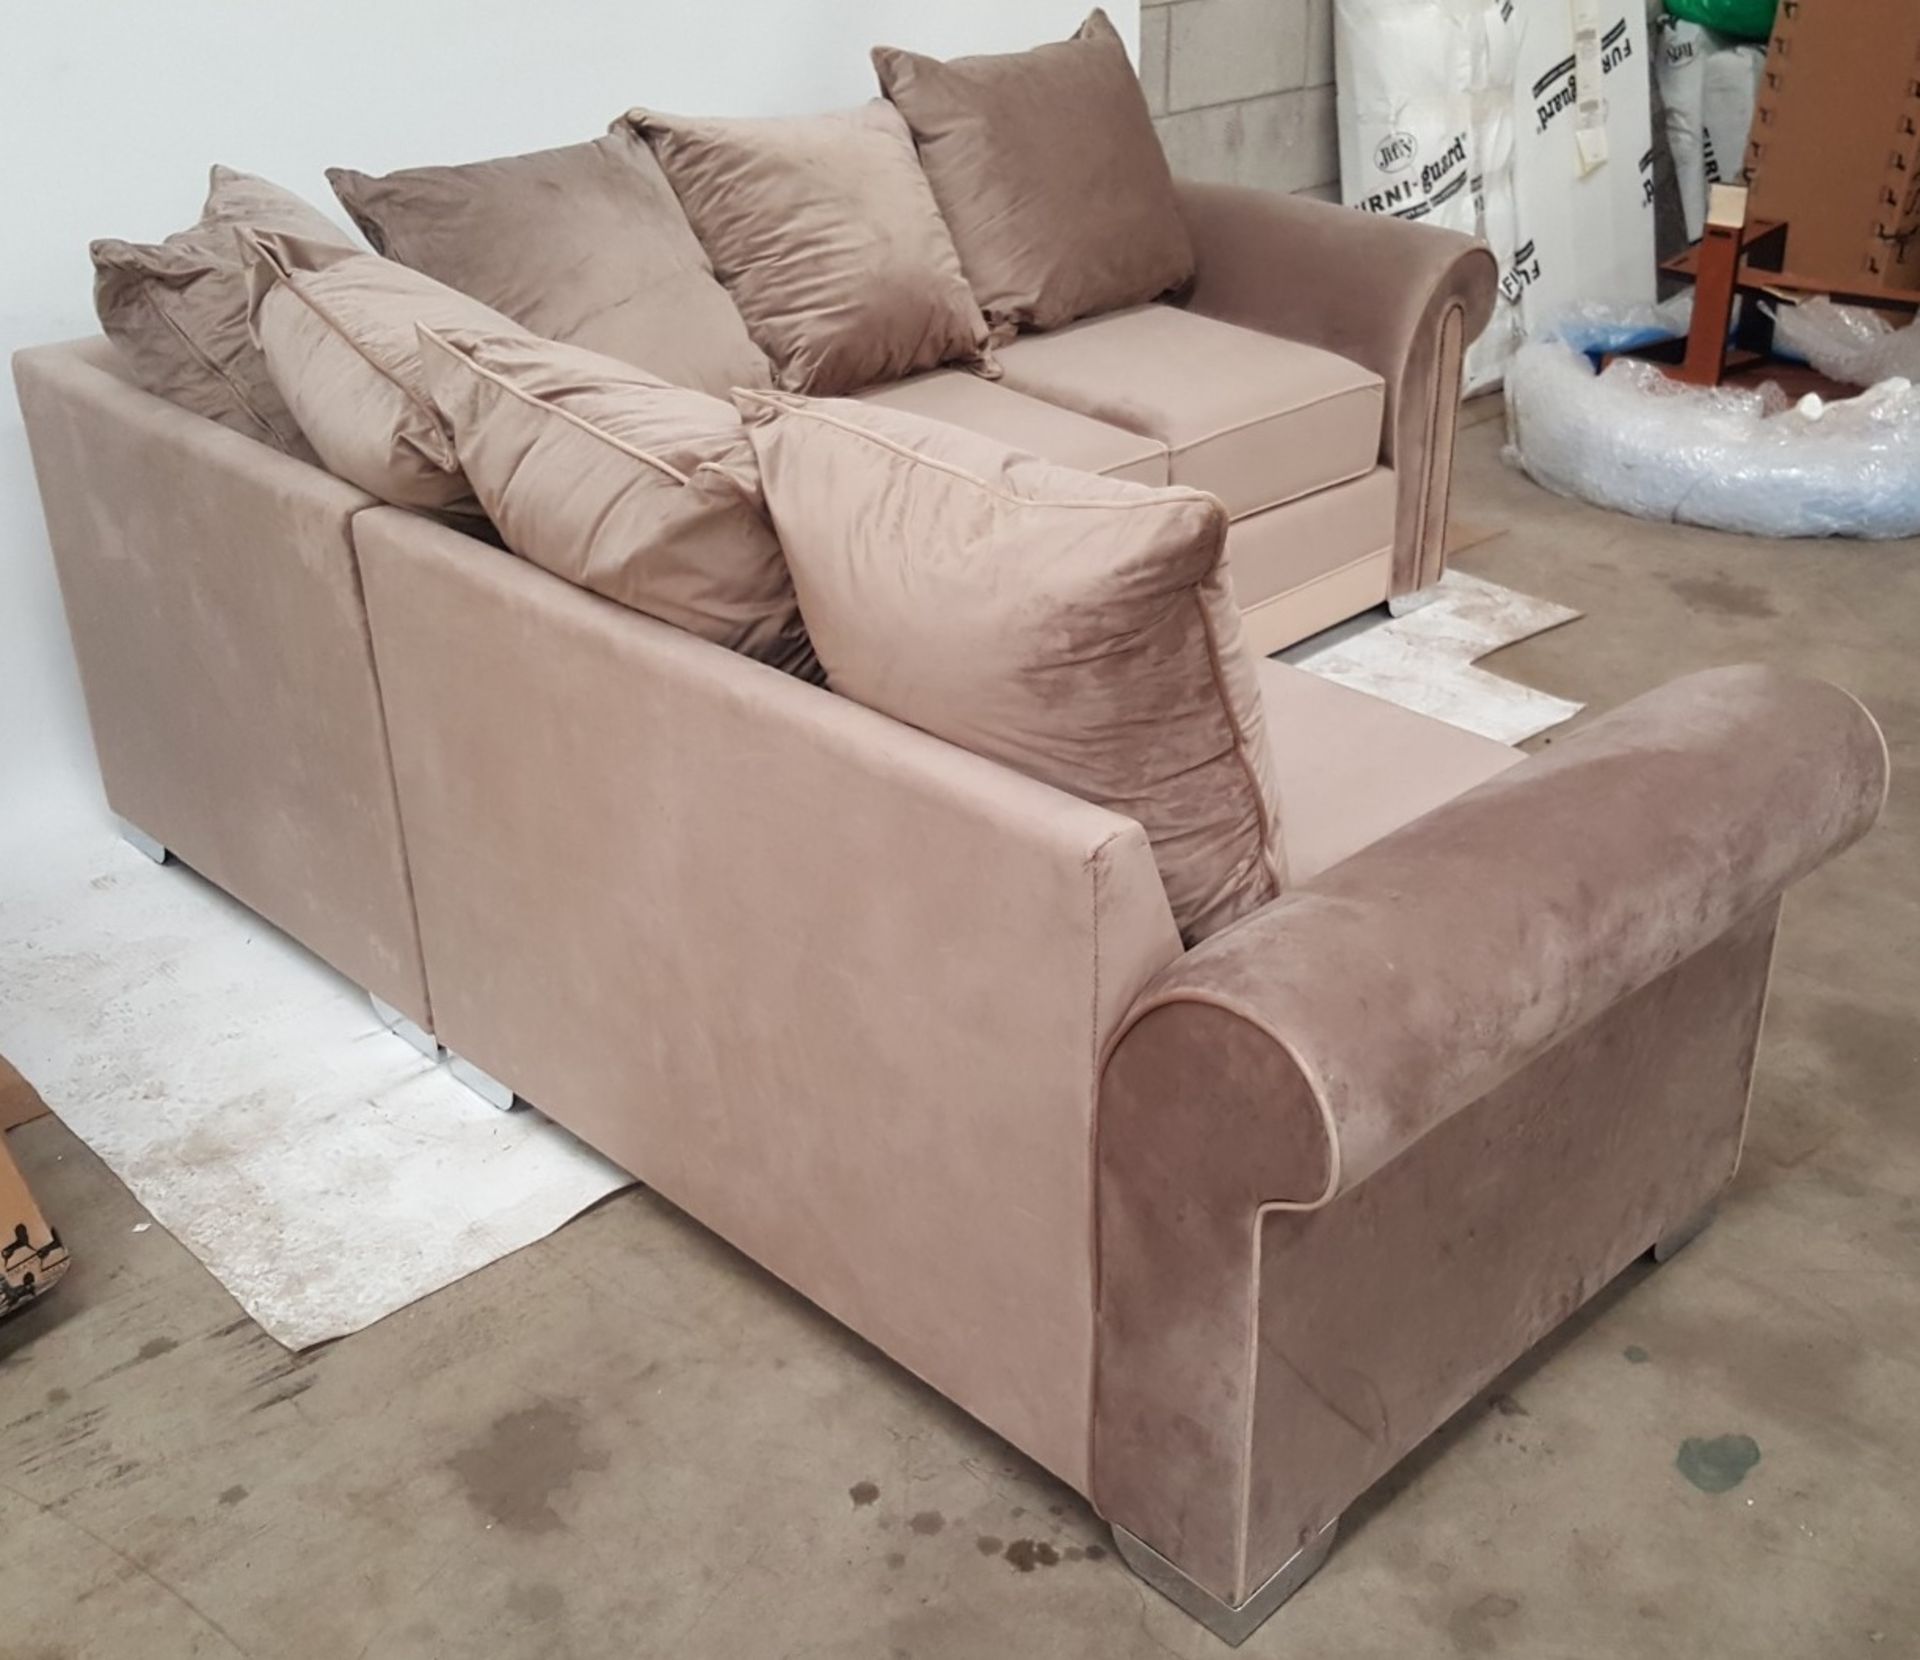 1 x Lavish Moroccan Brown Plush Velvet L-Shaped Corner Seater Sofa - Ref BY197 - Image 3 of 7